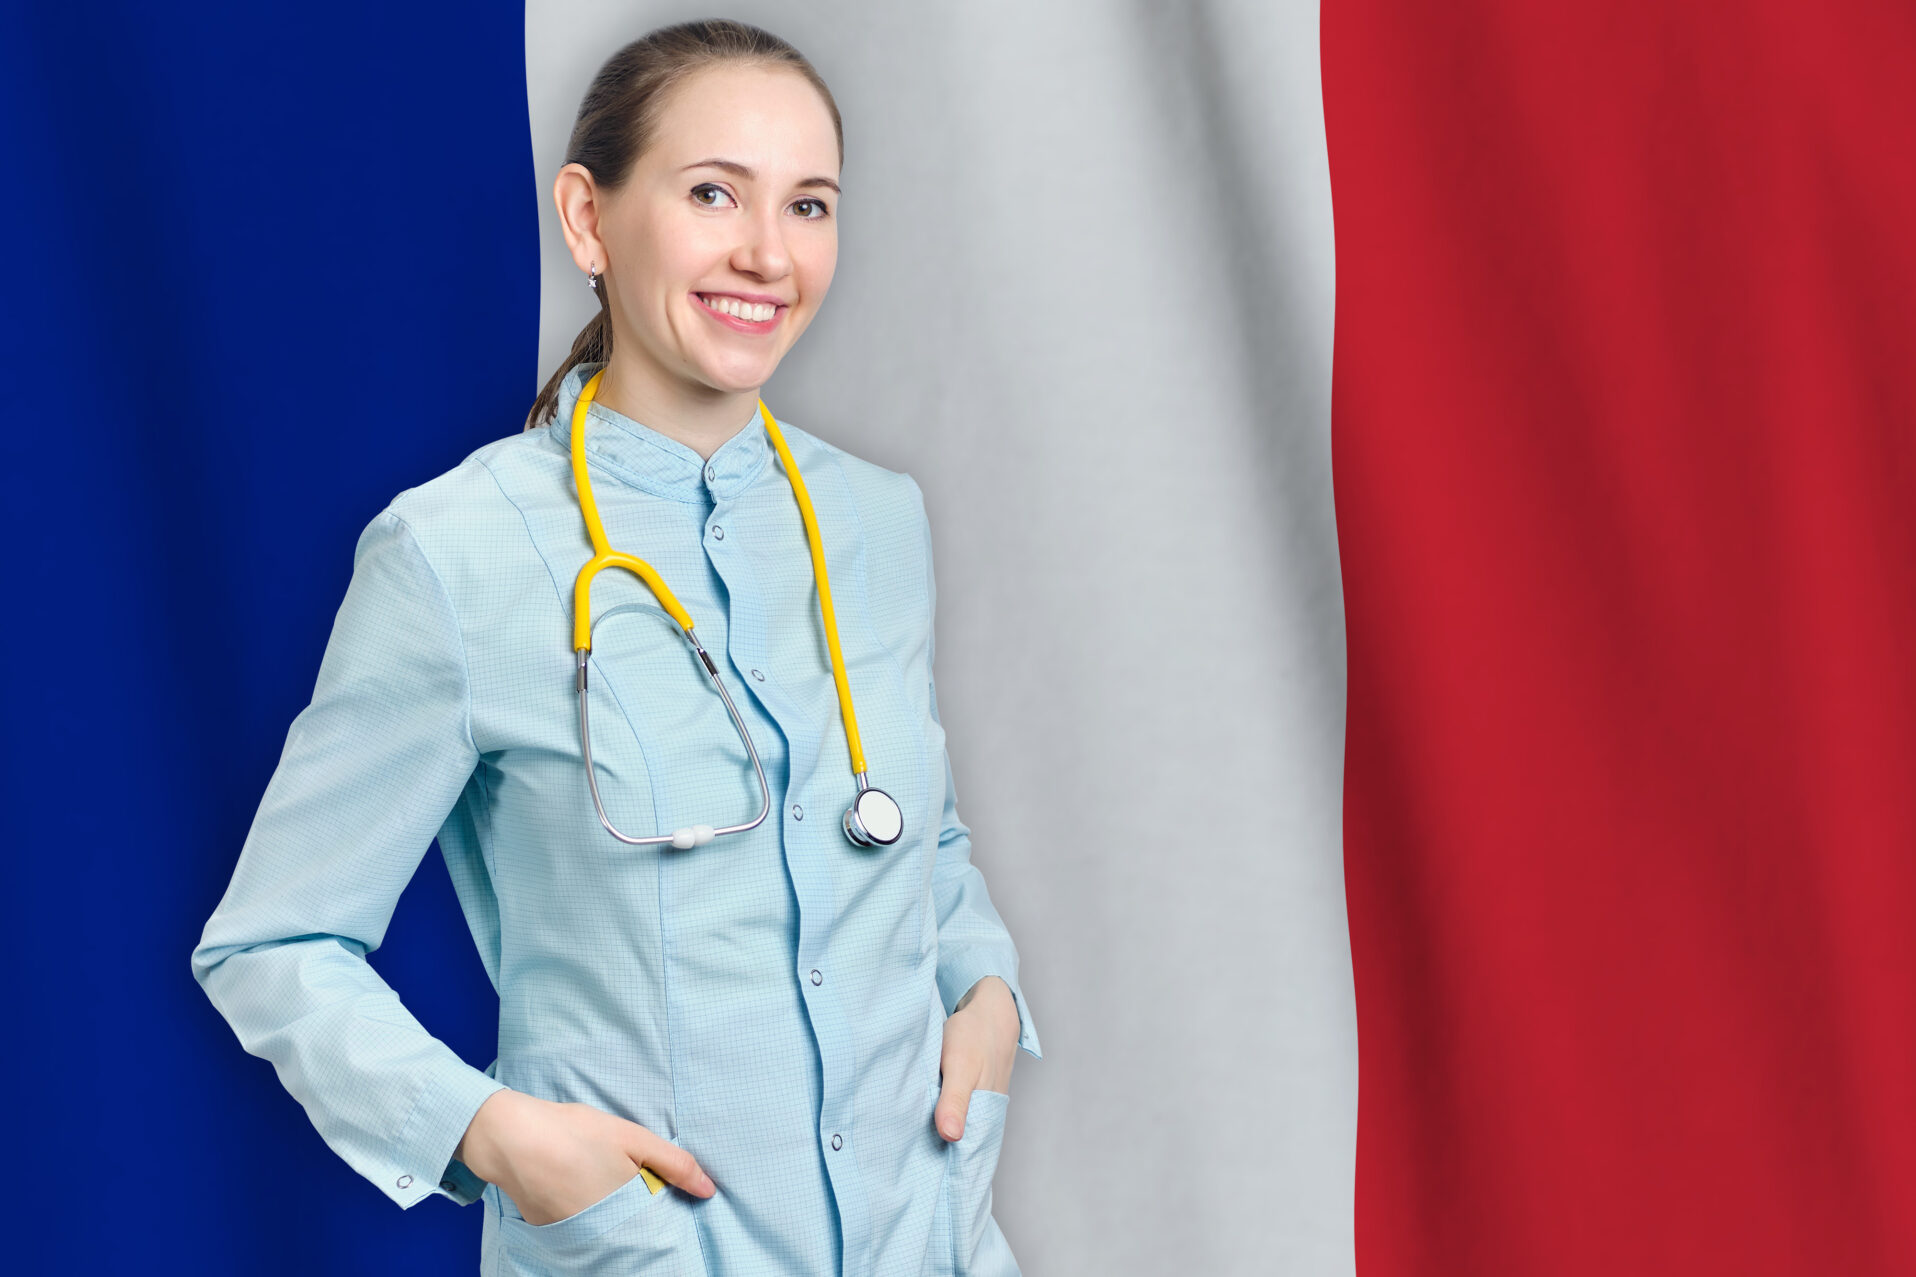 Medizinstudium in Frankreich